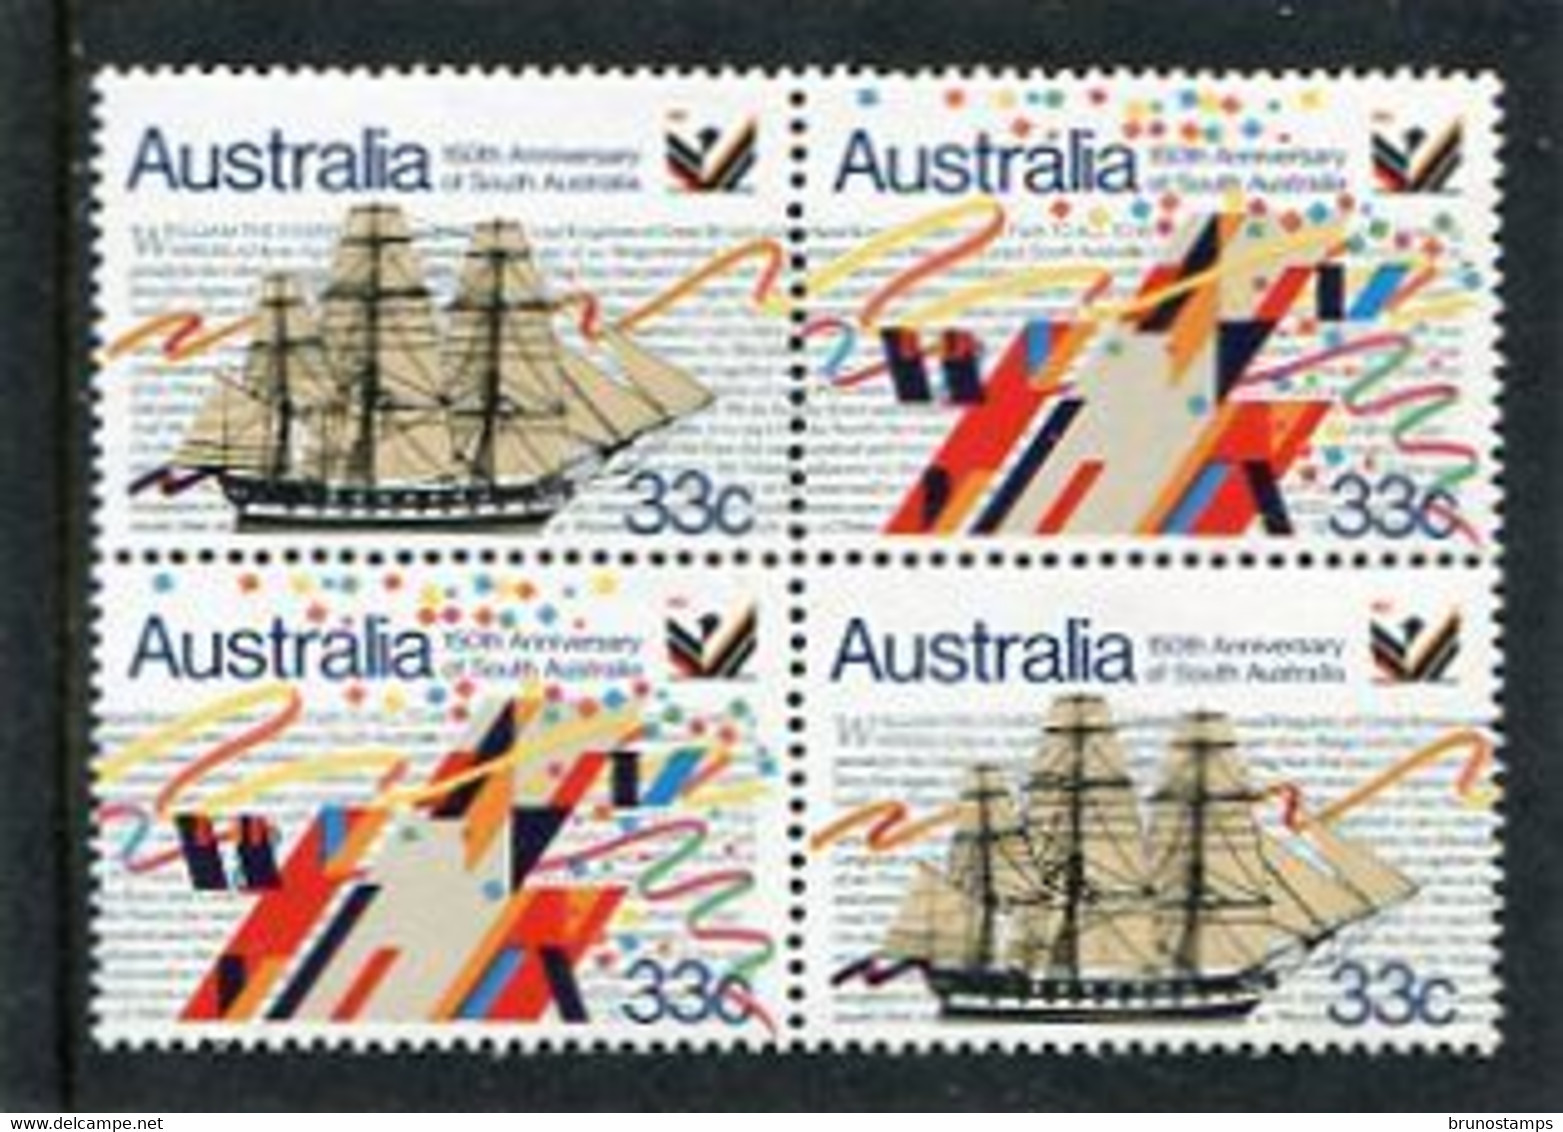 AUSTRALIA - 1986  SOUTH AUSTRALIA  BLOCK OF 4  MINT NH - Ongebruikt